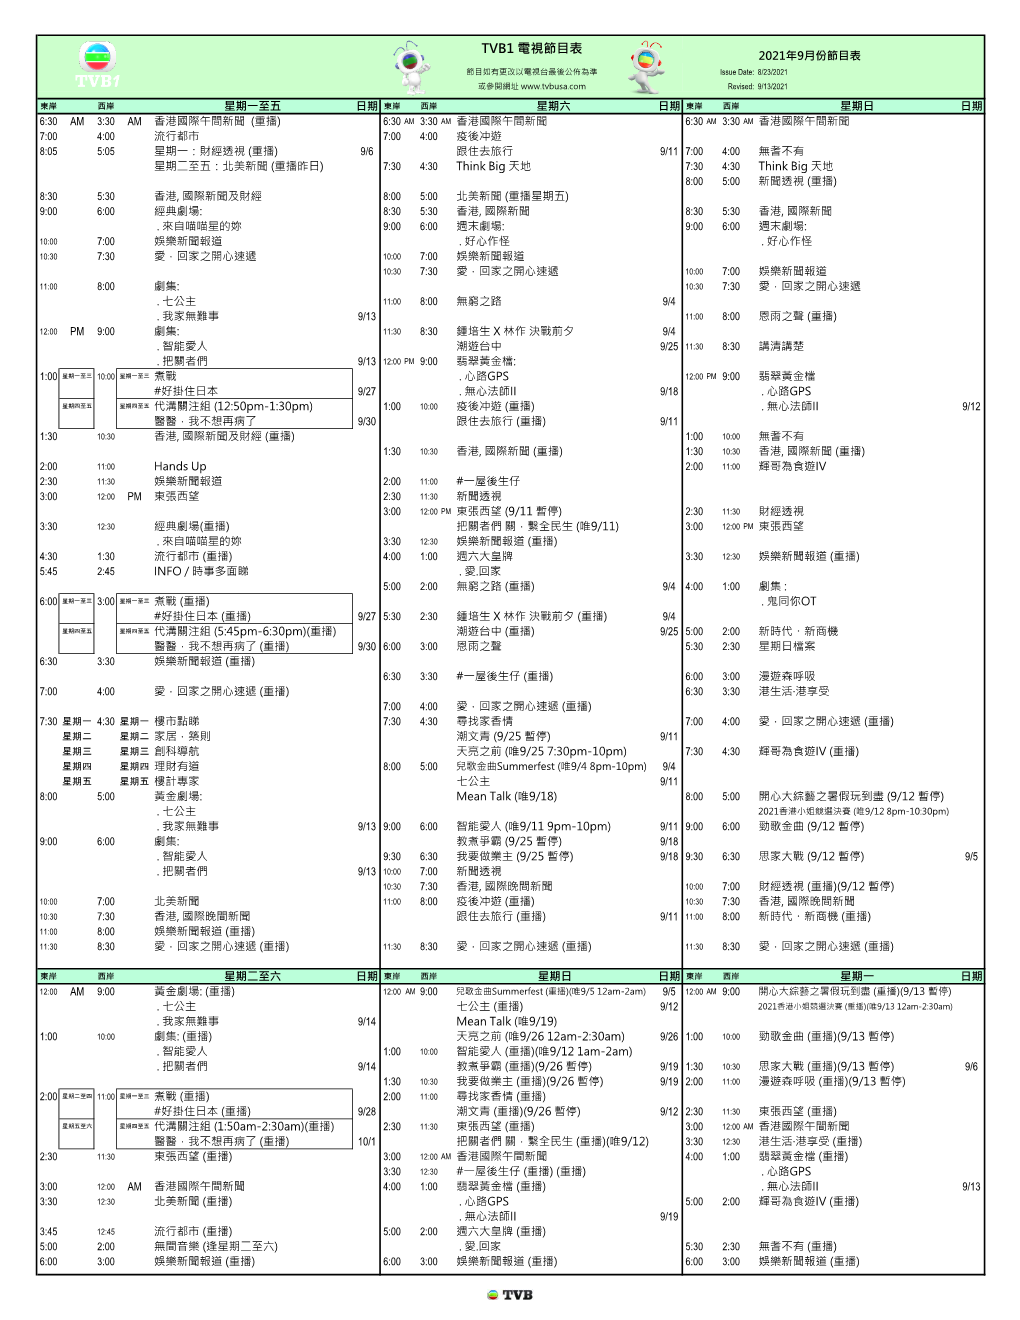 TVB1 電視節目表 2021年9月份節目表 節目如有更改以電視台最後公佈為準 Issue Date: 8/23/2021 或參閱網址 Revised: 9/13/2021